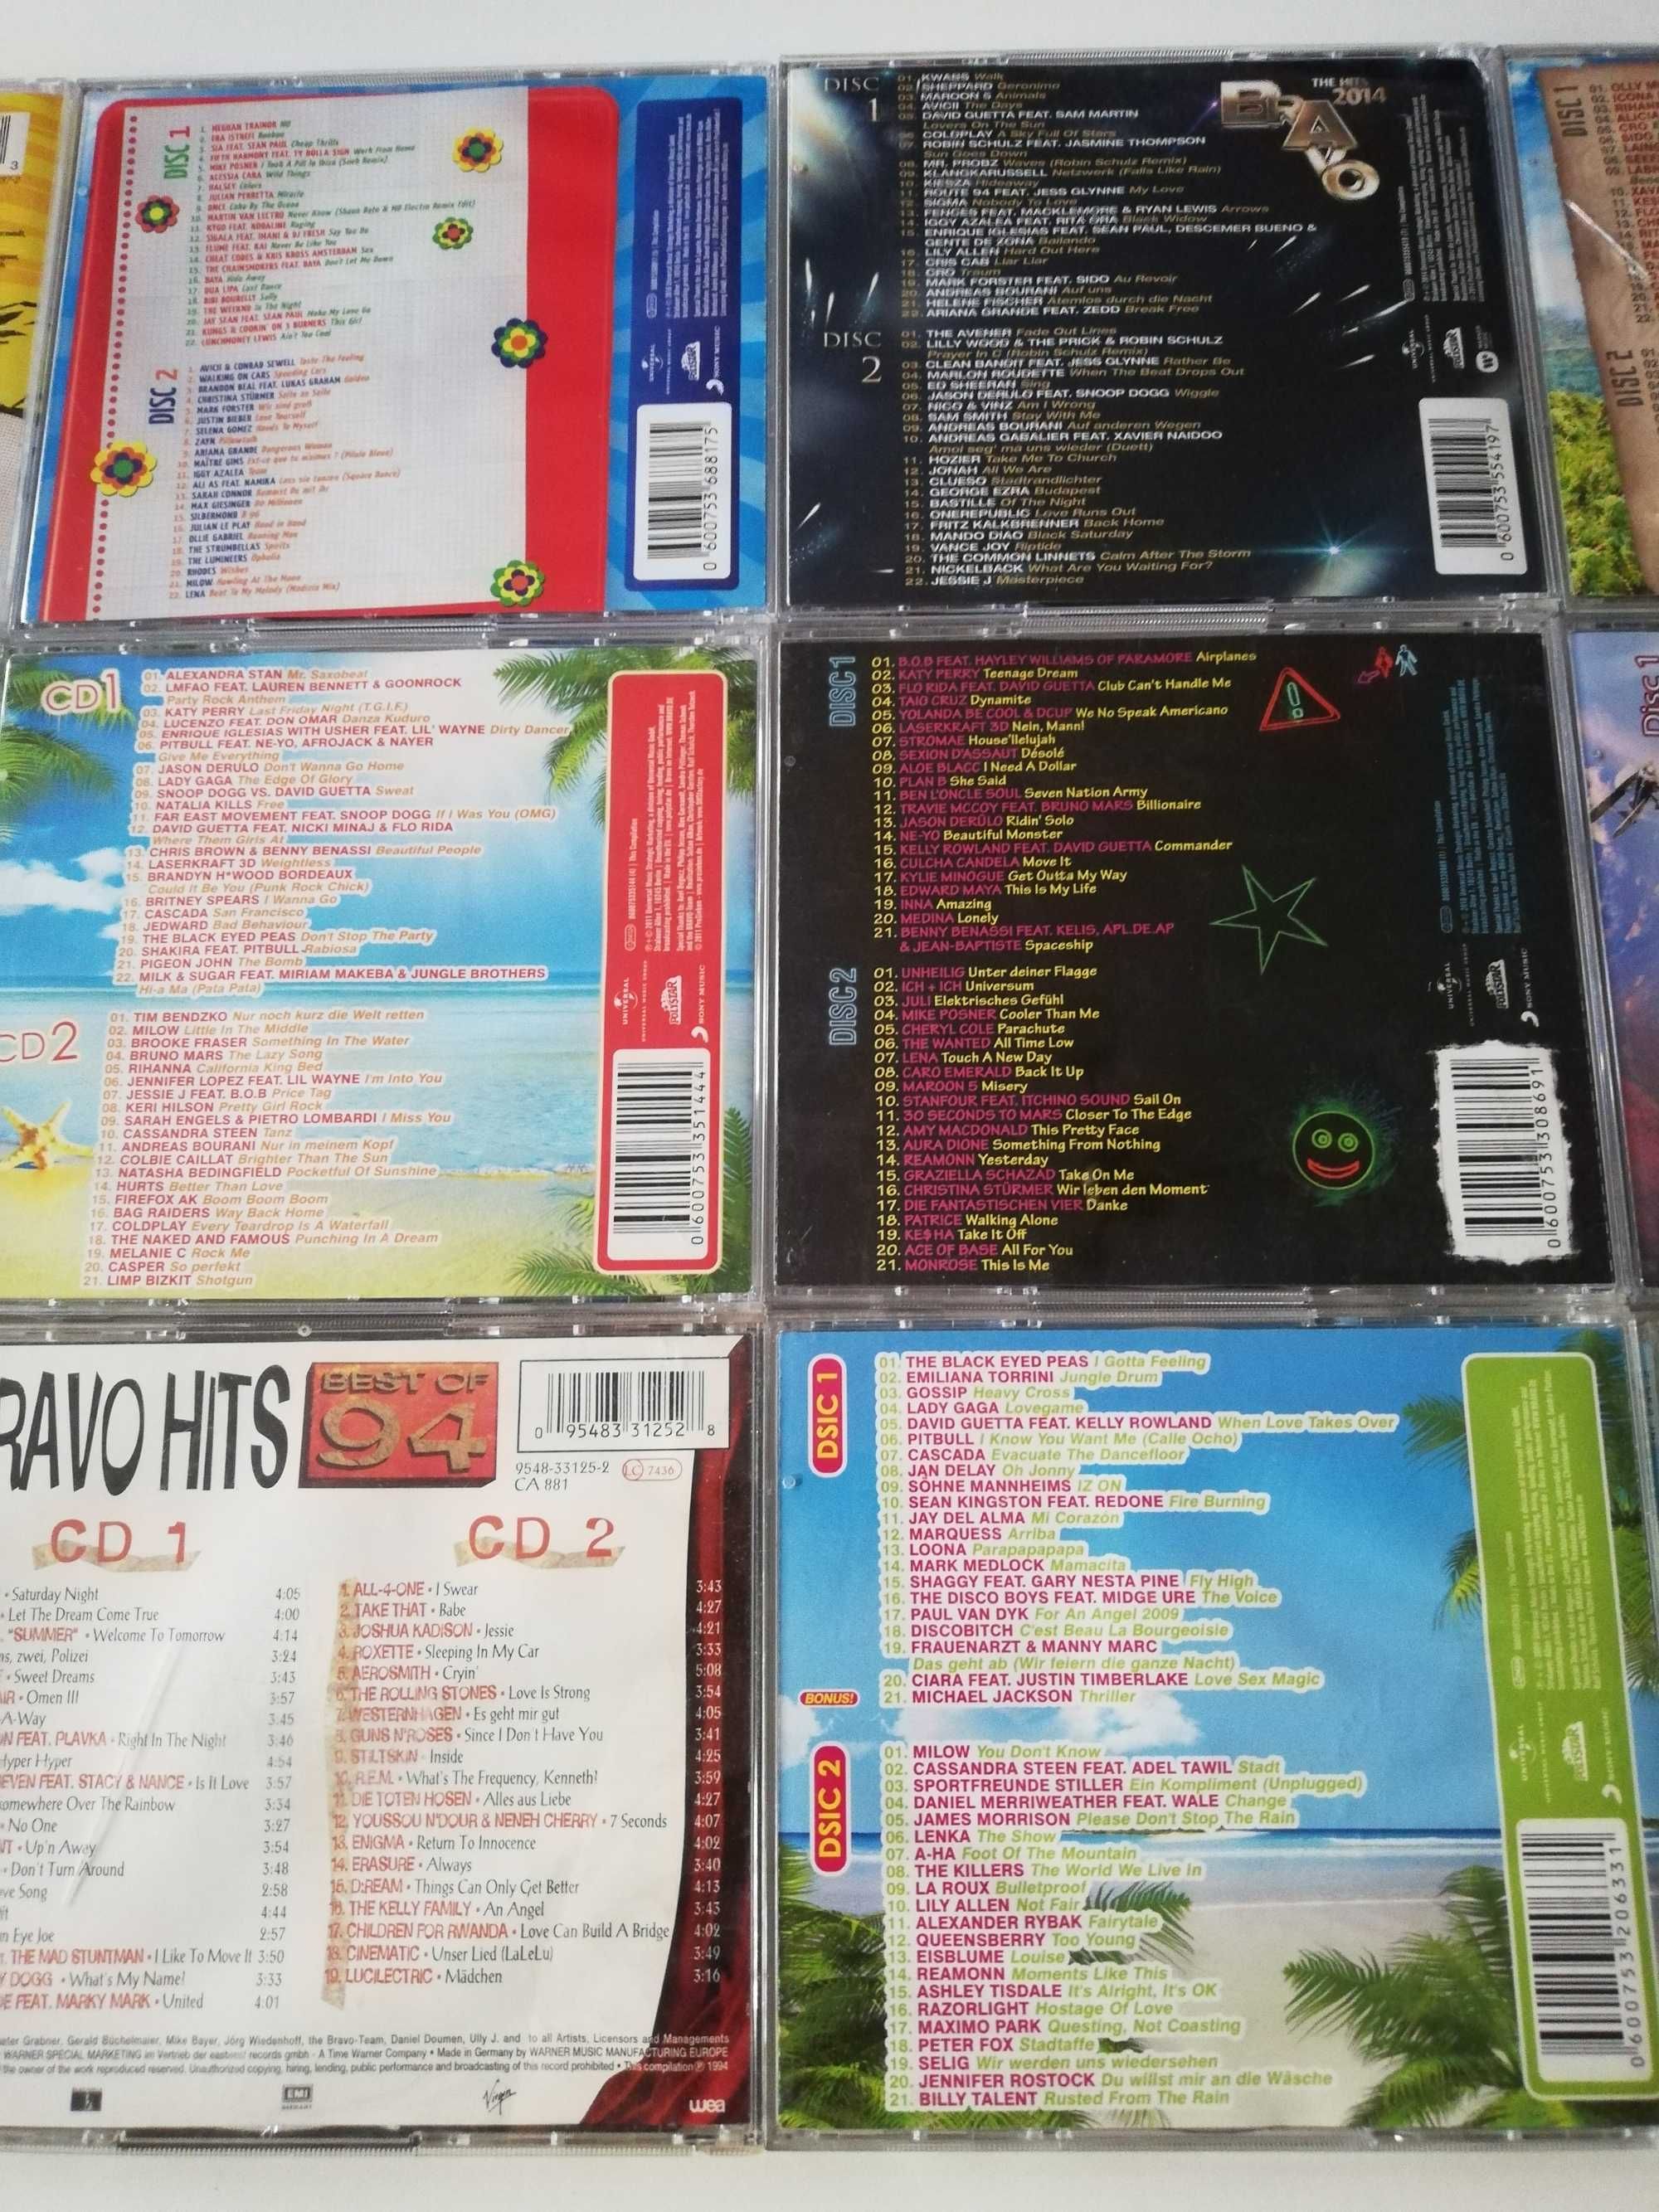 Płyty CD Bravo hits